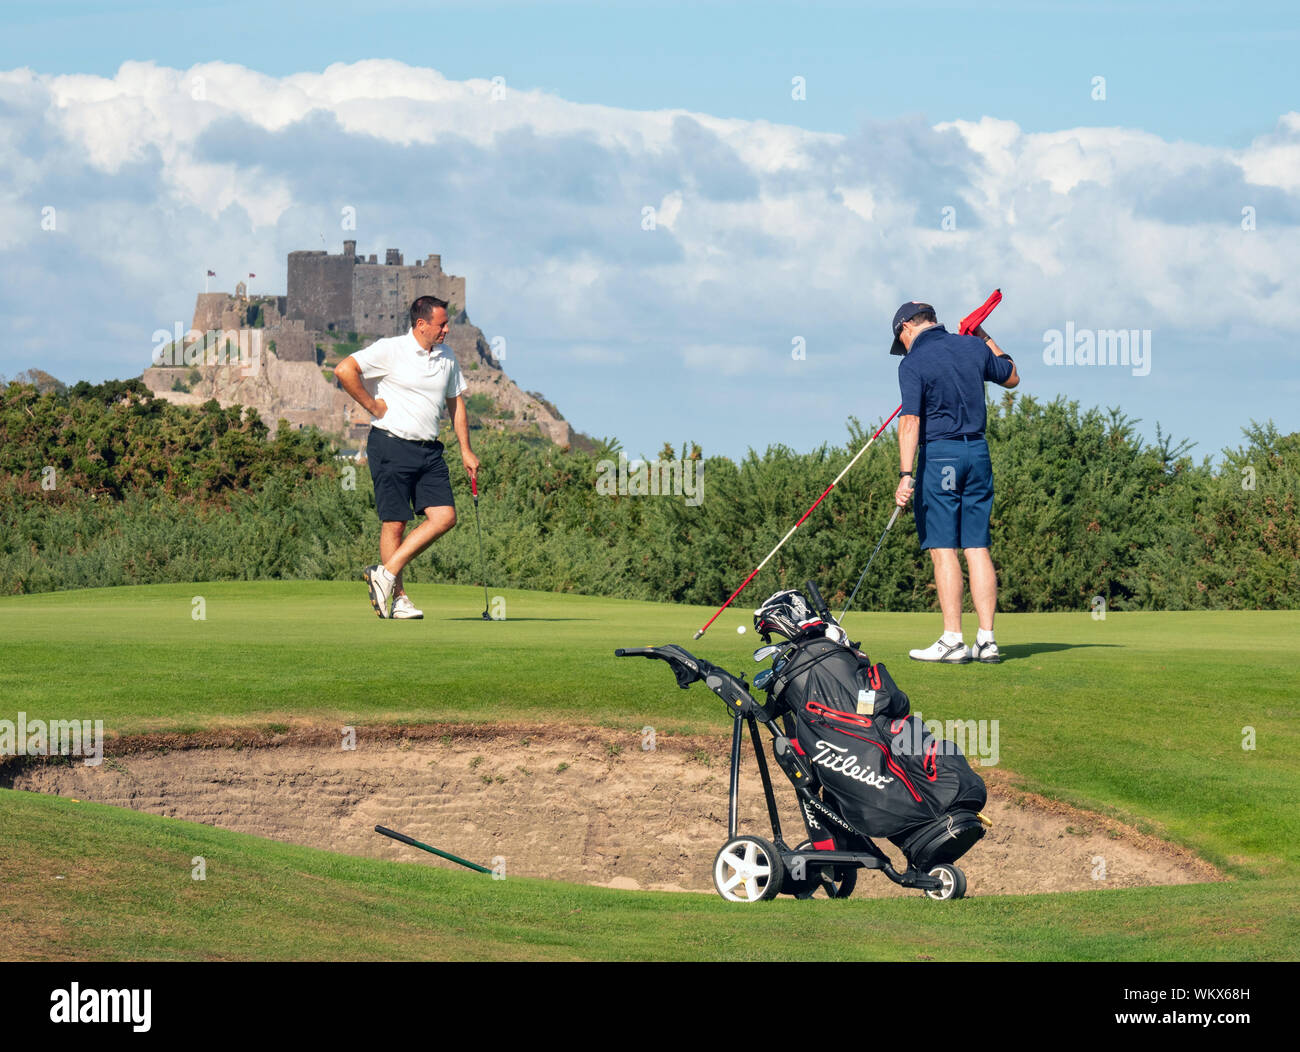 Royal jersey golf club fotografías e imágenes de alta resolución - Alamy